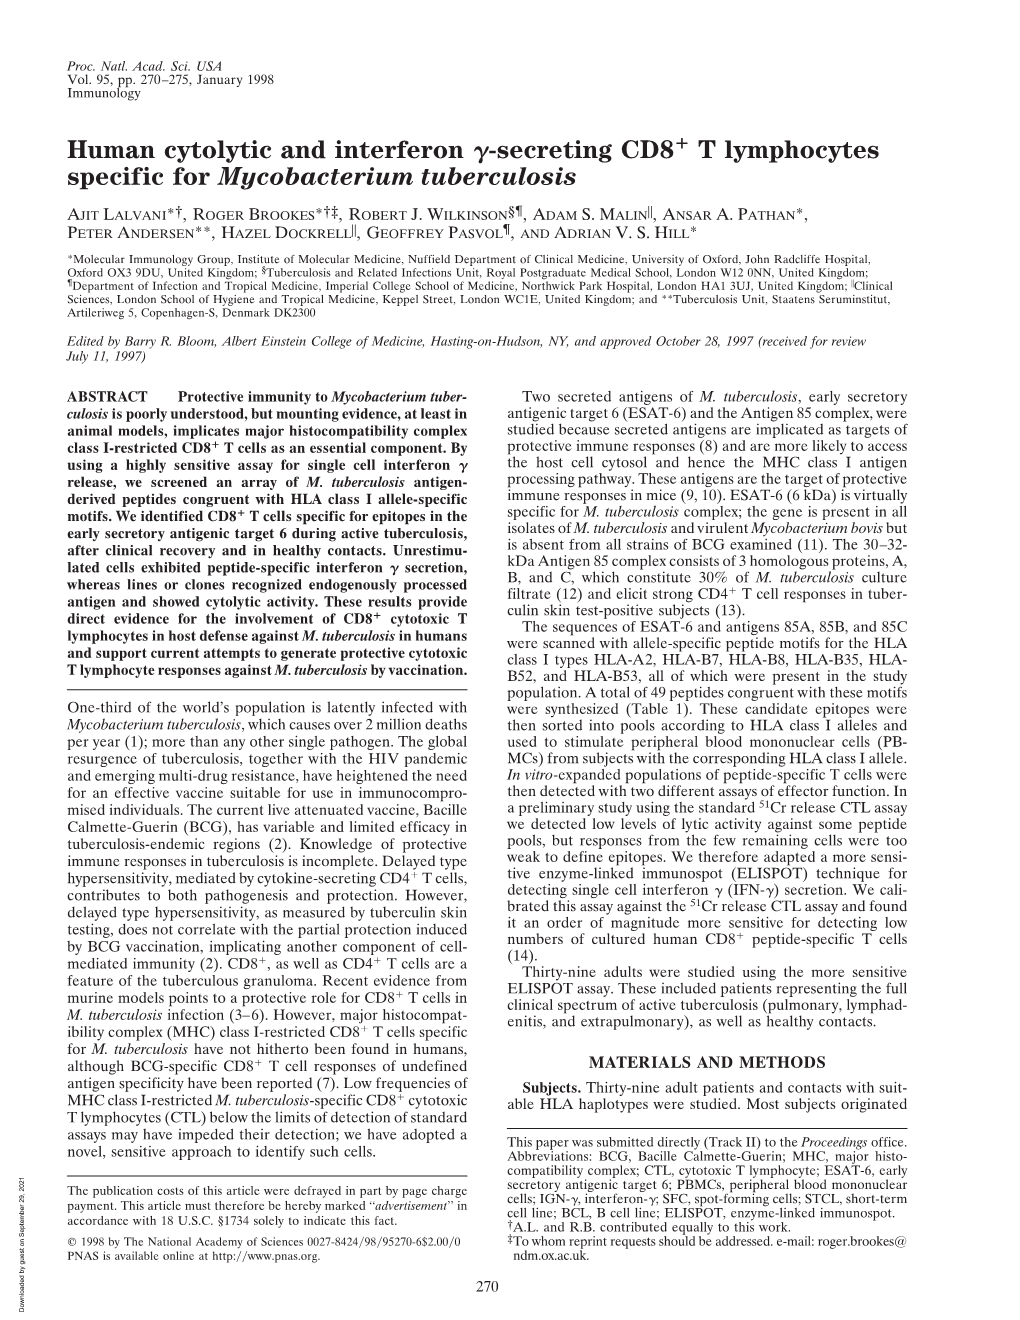 Secreting CD8 T Lymphocytes Specific for Mycobacterium